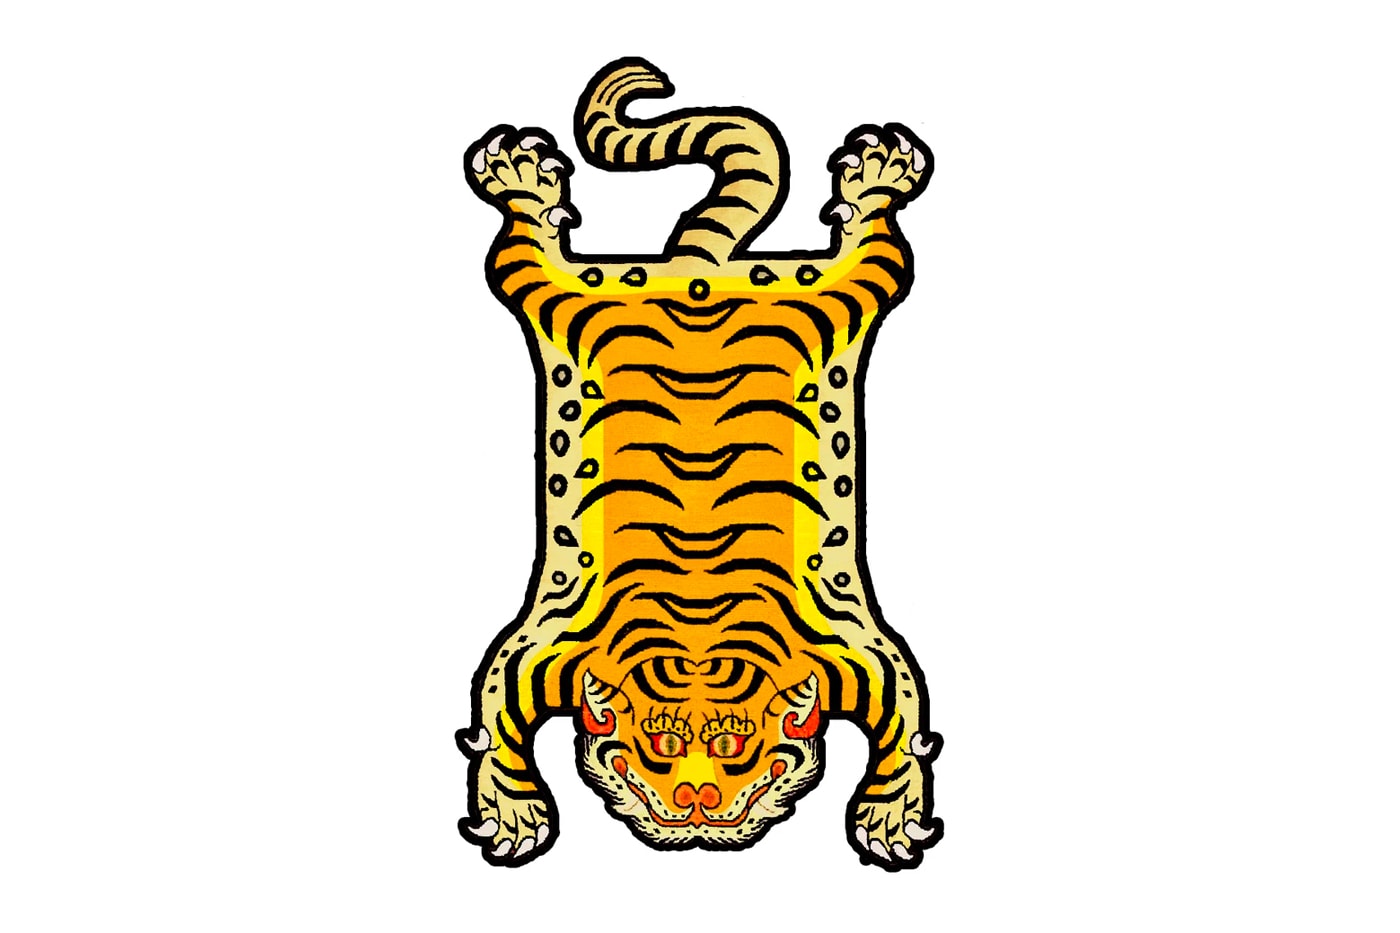 RAW EMOTIONS 熱話單品「虎毯」Tibetan Tiger Mascot Rug 全尺寸補貨